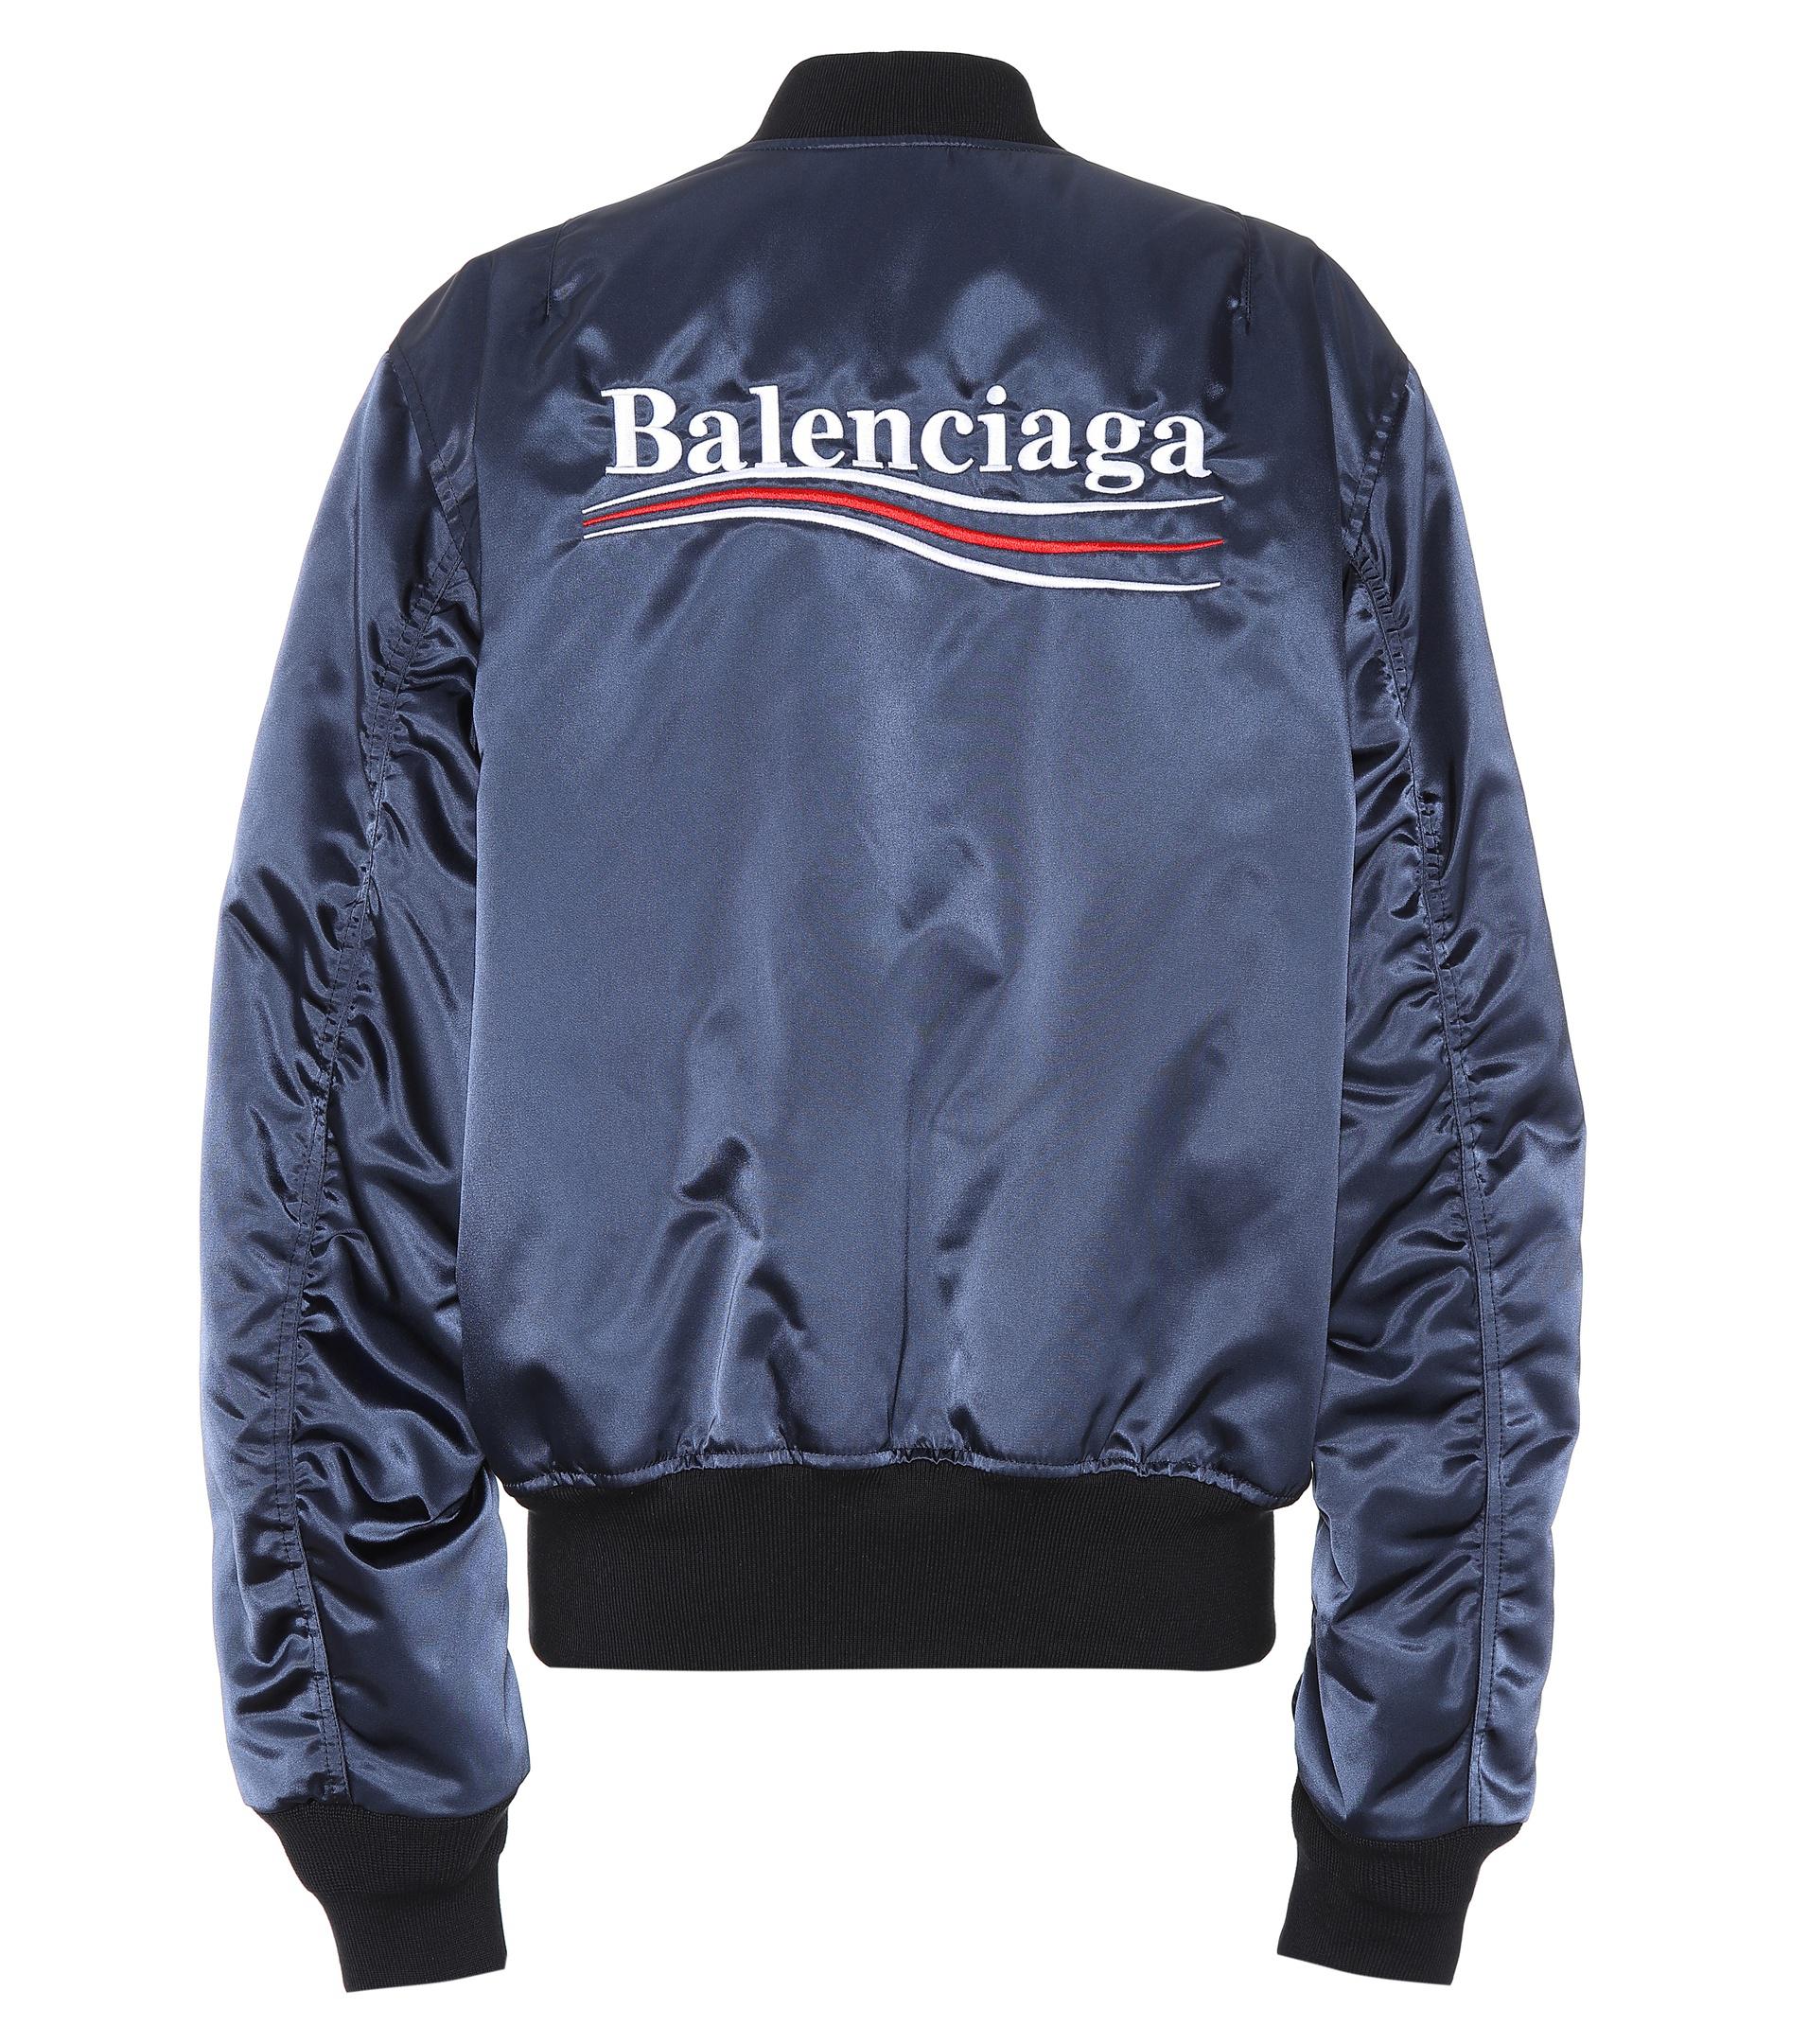 Balenciaga Logo Satin Bomber Jacket in Blue - Lyst